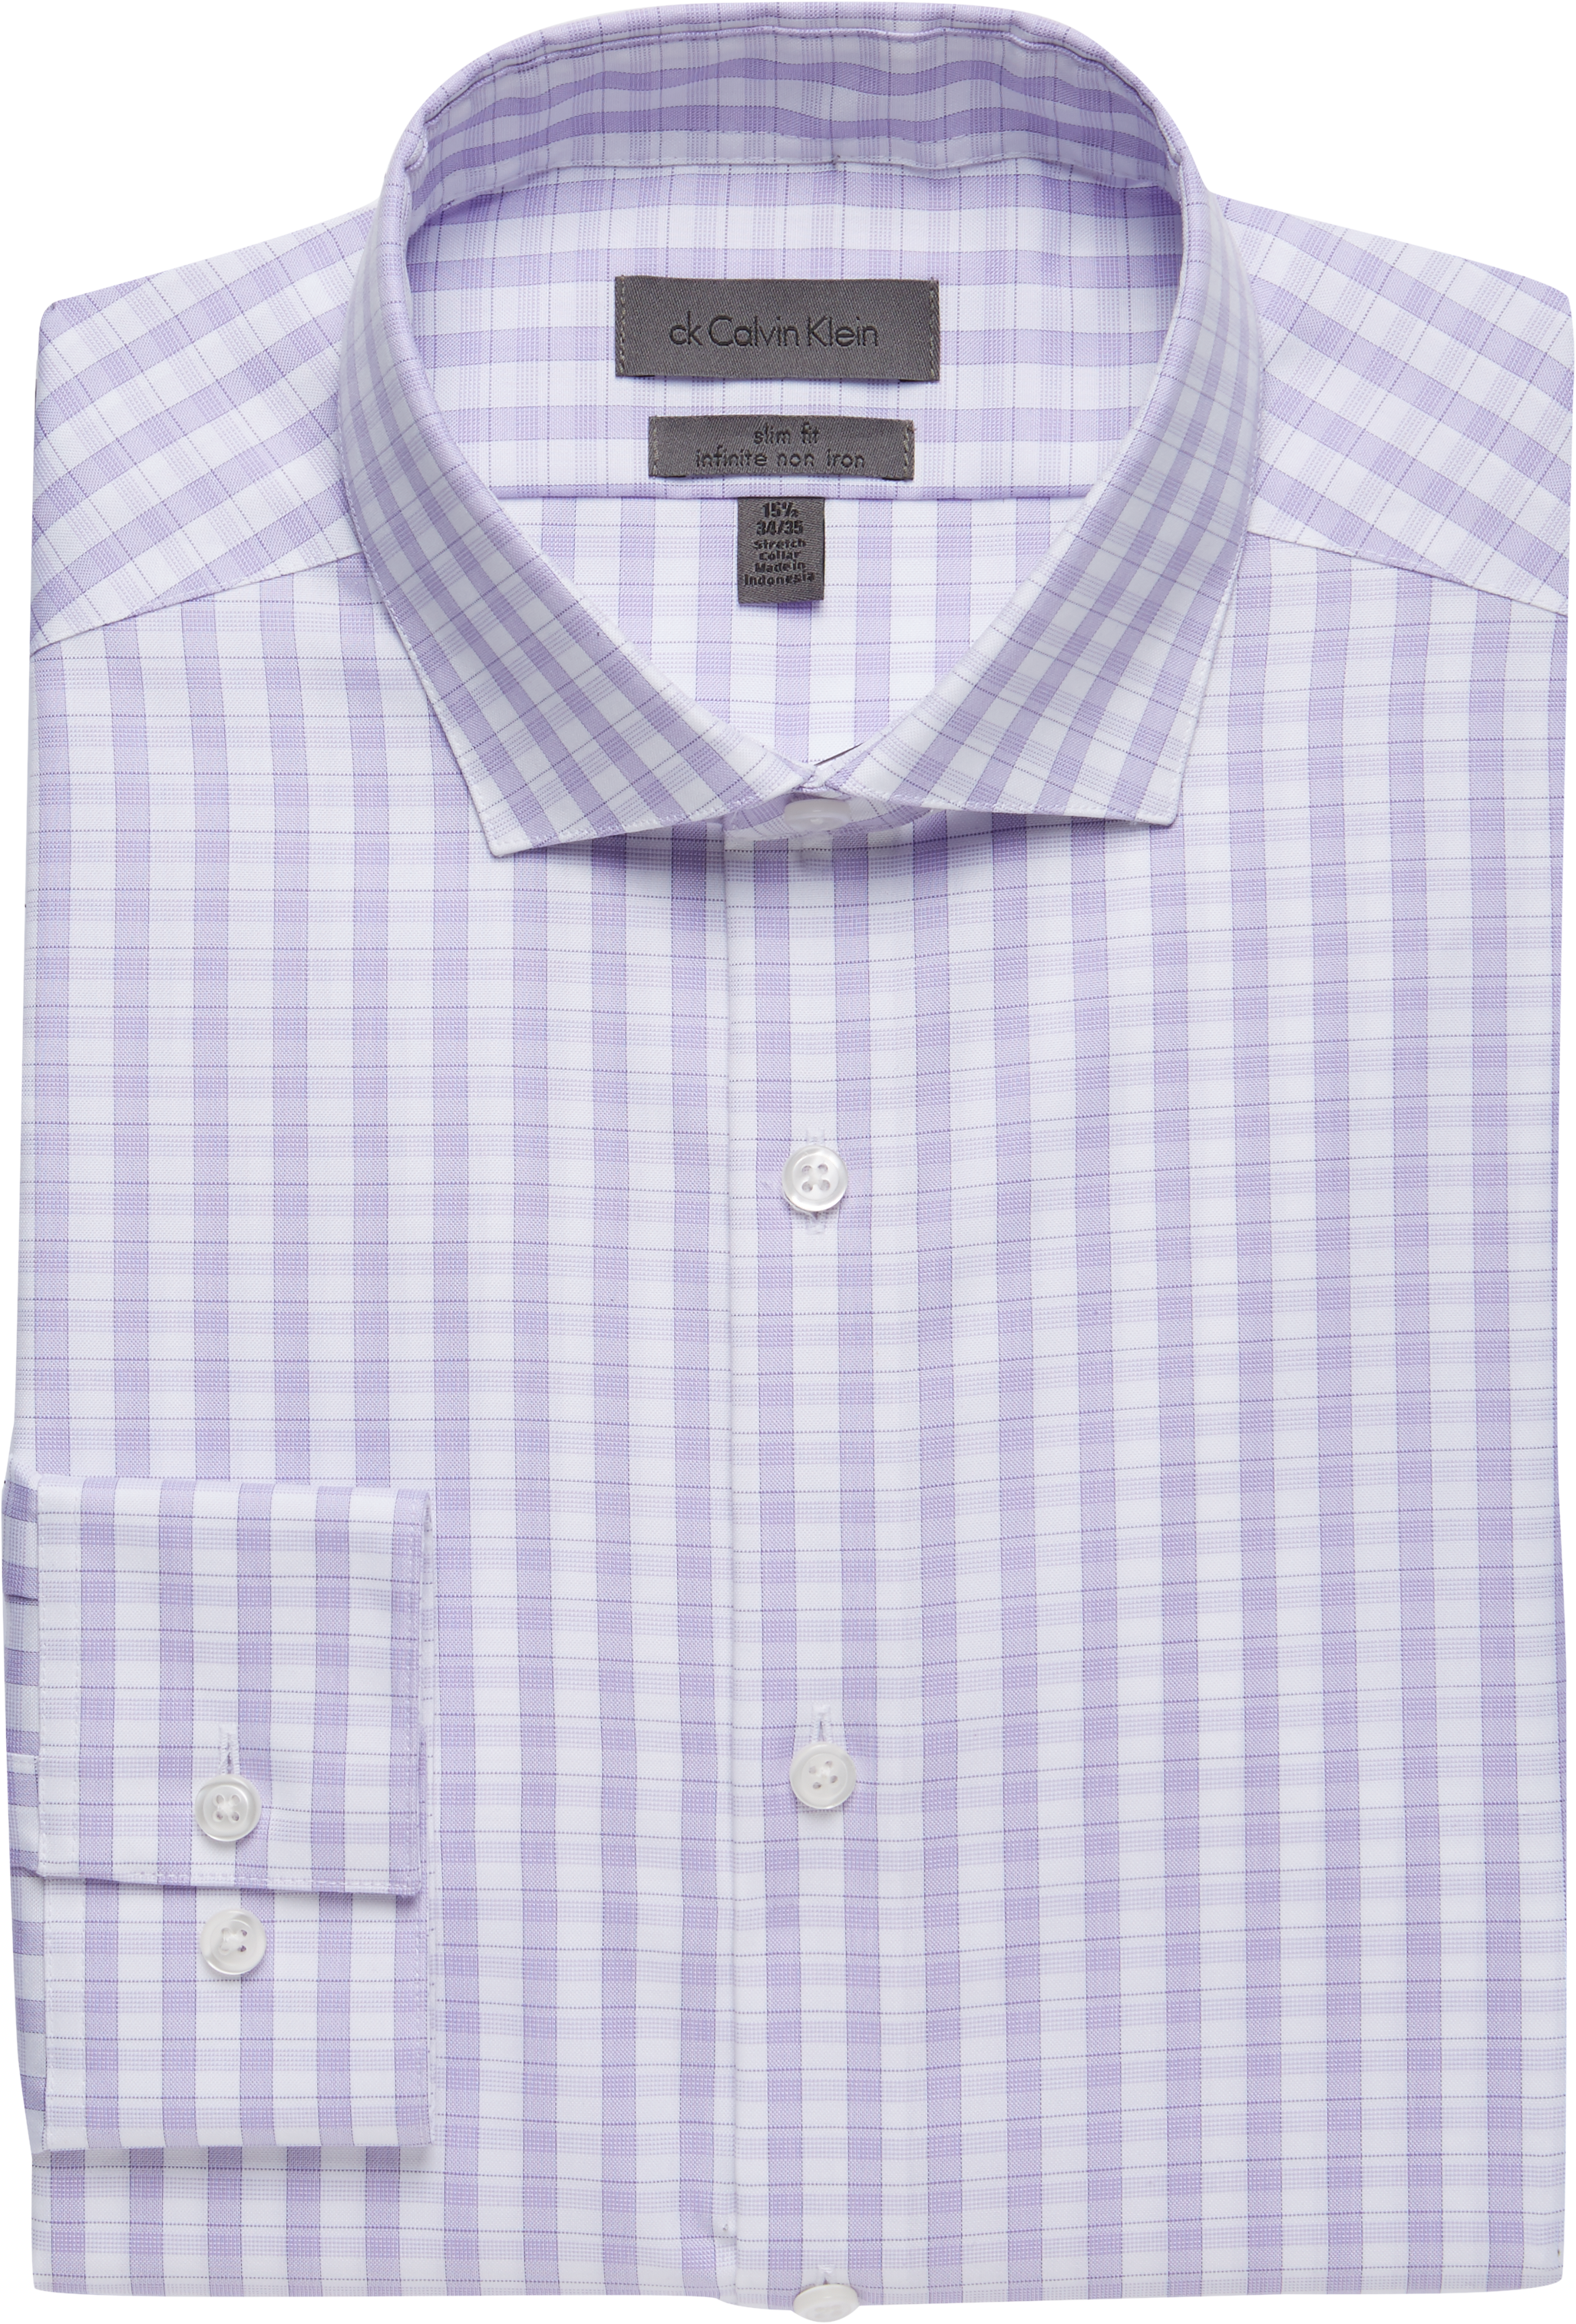 Mens Lavender Dress Shirt | Mens Wearhouse